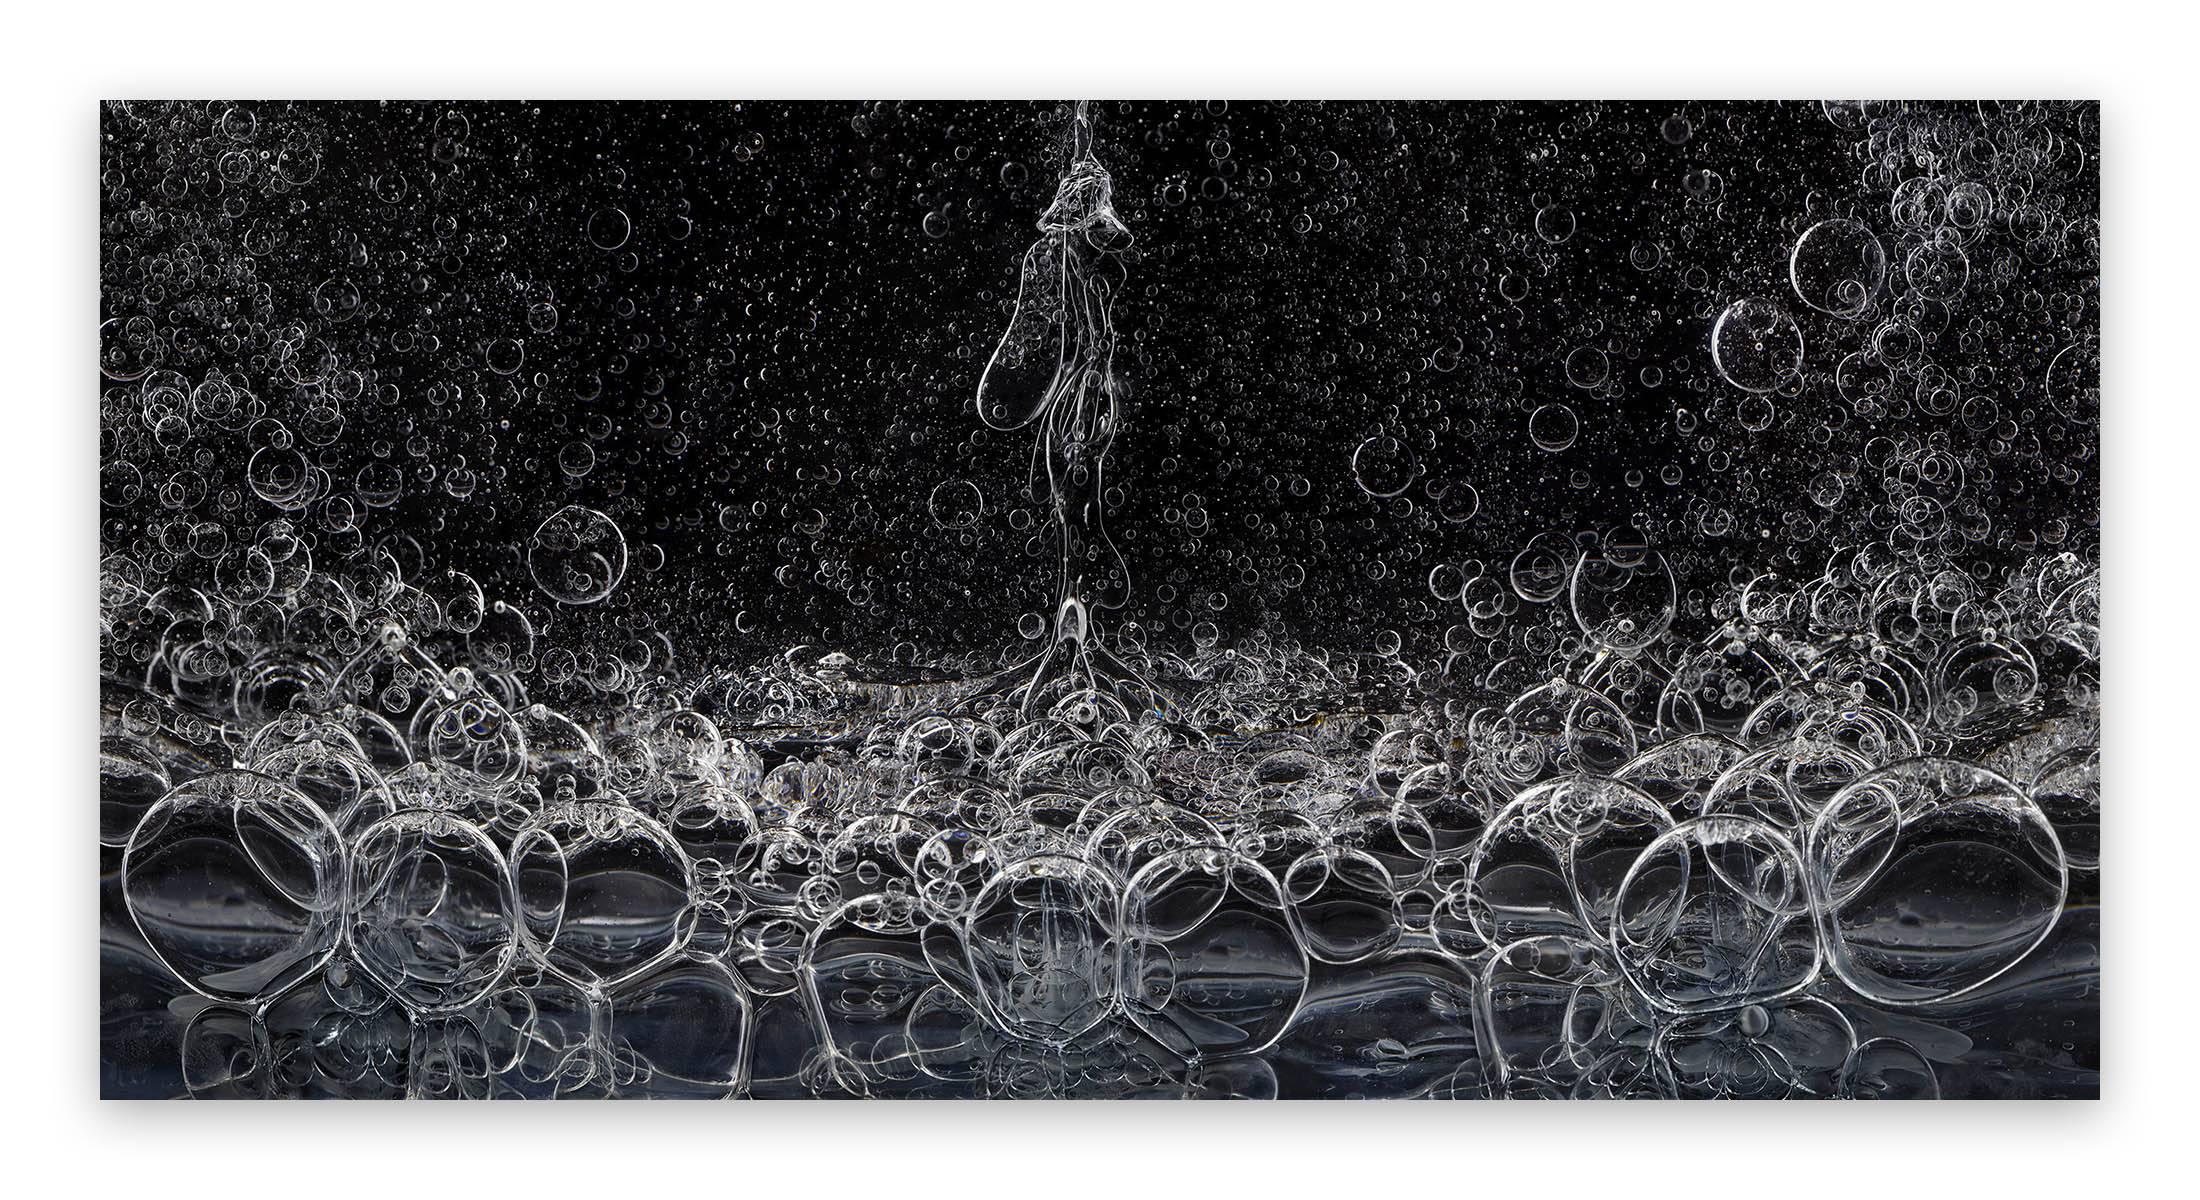 Seb Janiak Abstract Photograph - Gravity - Liquid 19 (Large)